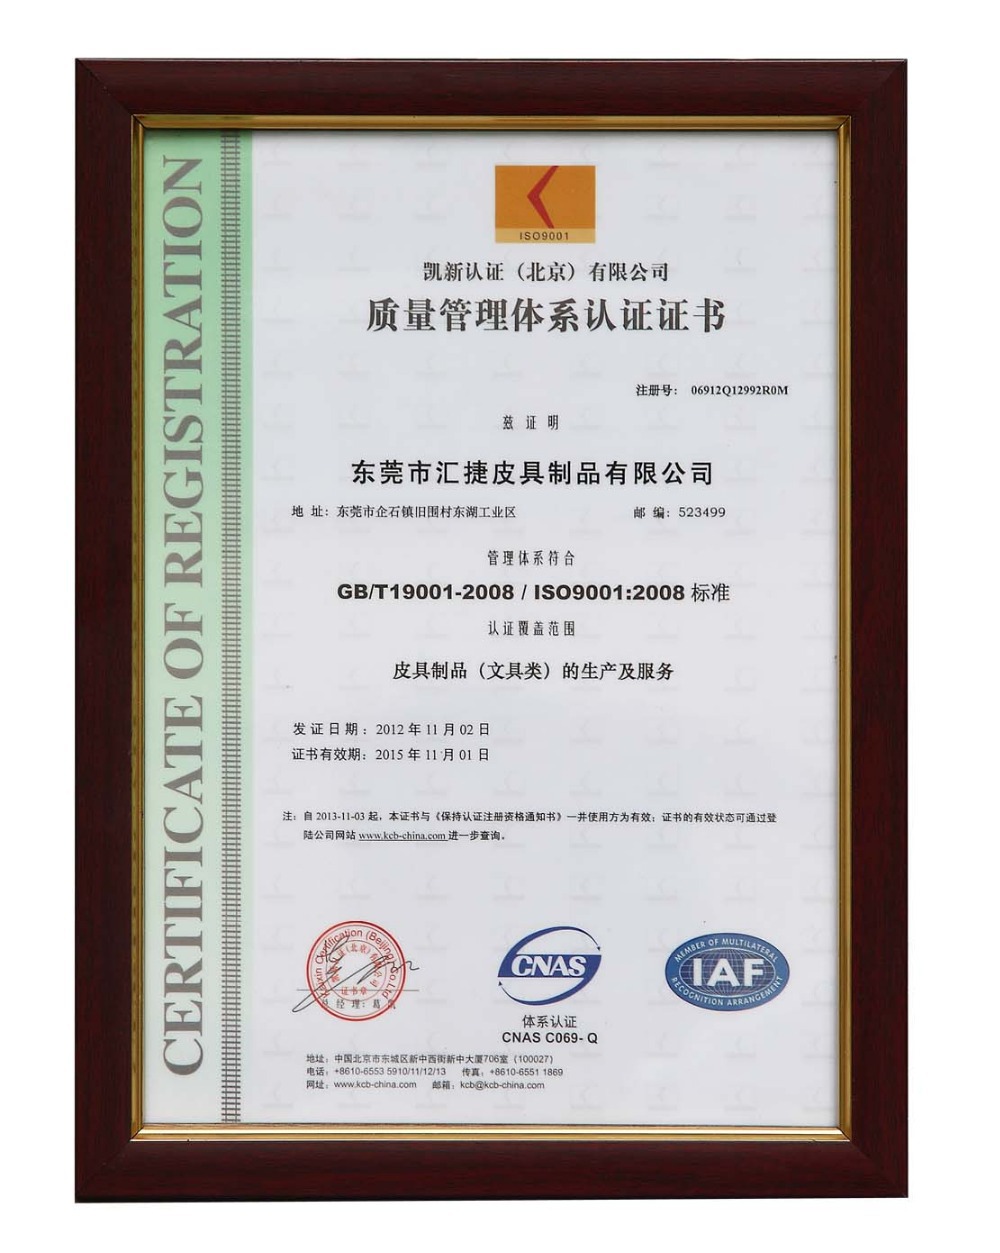 Certificate of Registratio (1)